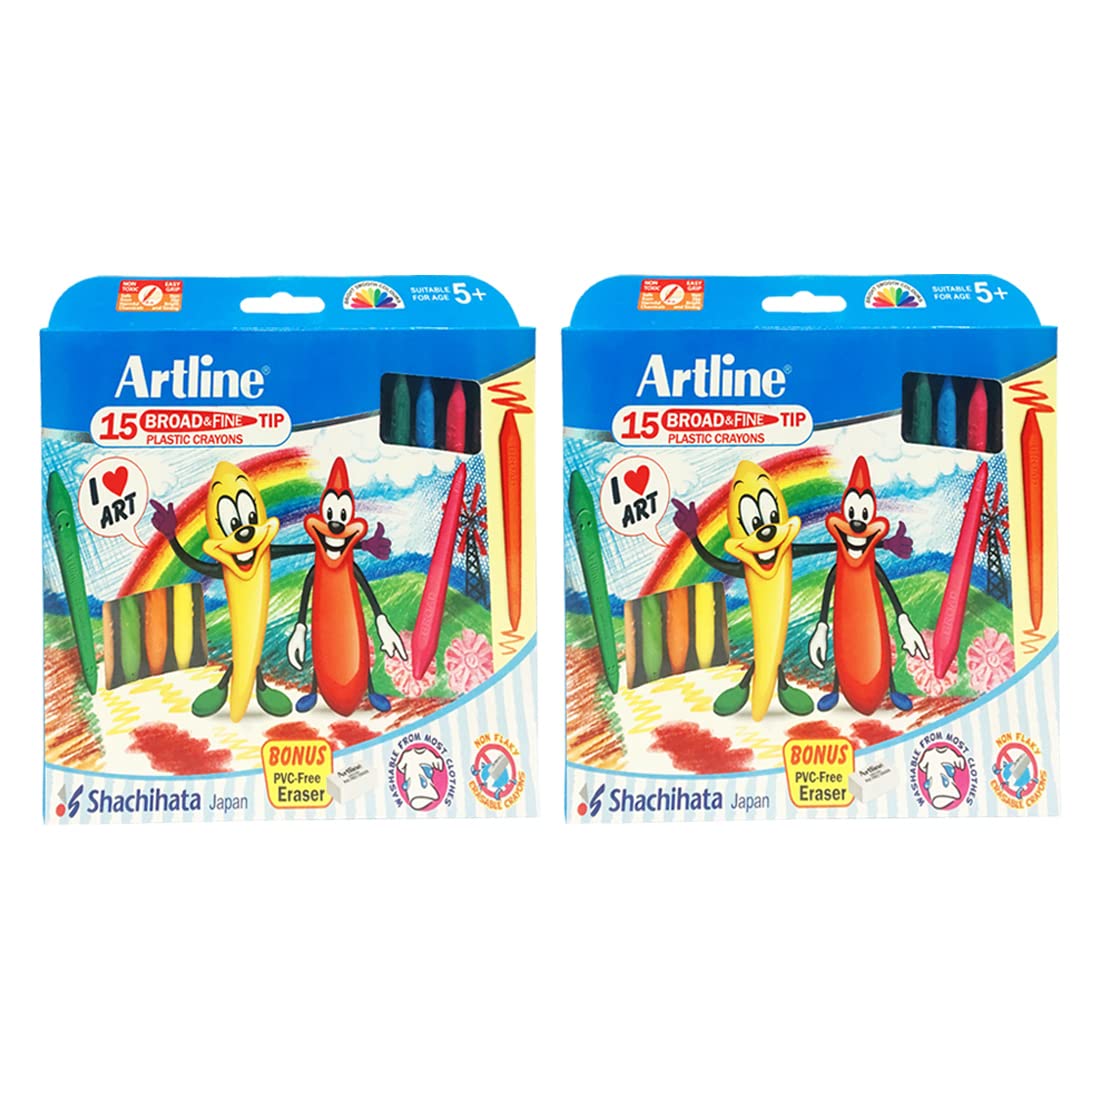 Artline Broad And Fine Tip Plastic Crayons